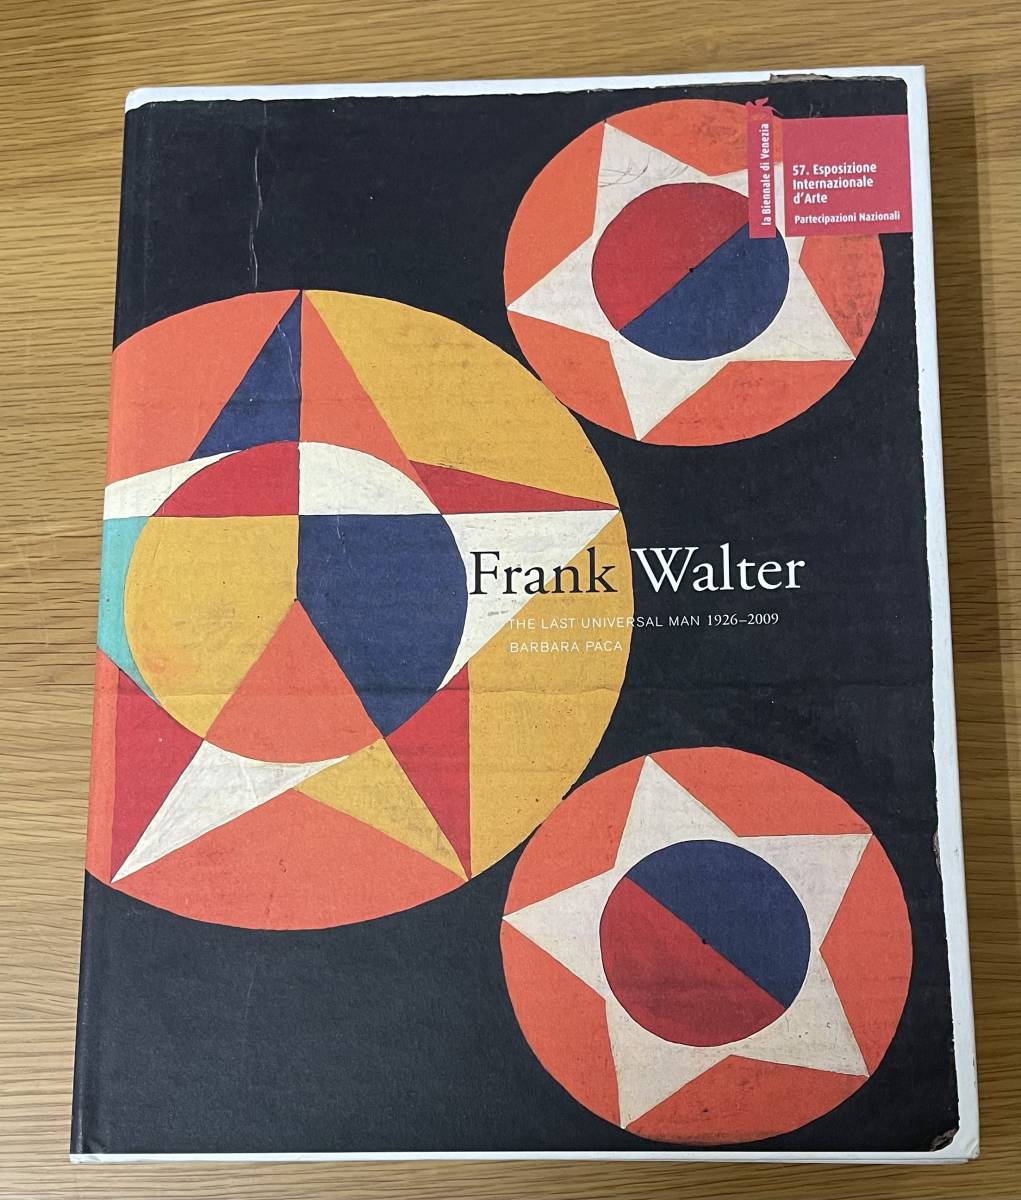 Frank Walter The Last Universal Man 1926 2009